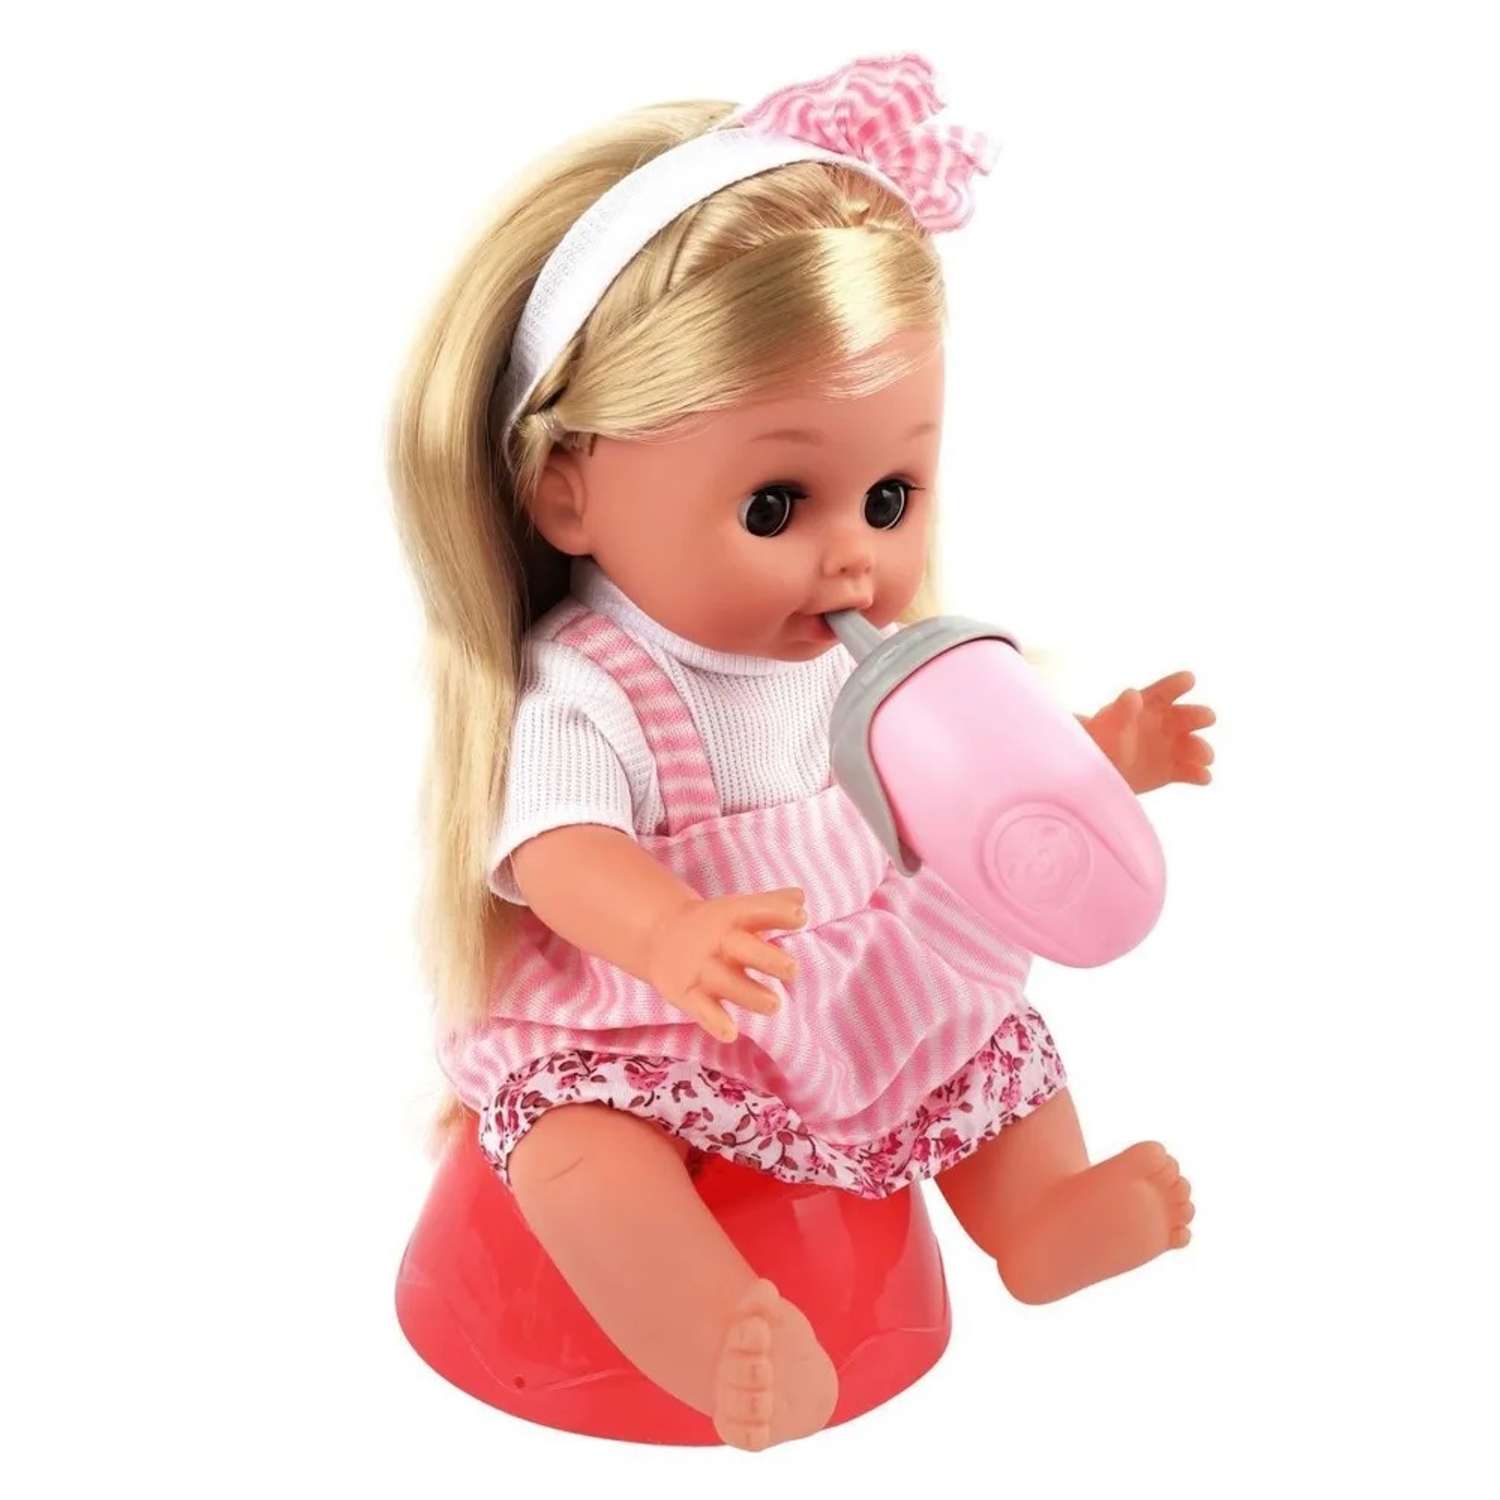 Кукла Пупс TrendToys Интерактивная 16 аксессуаров TT182 - фото 9